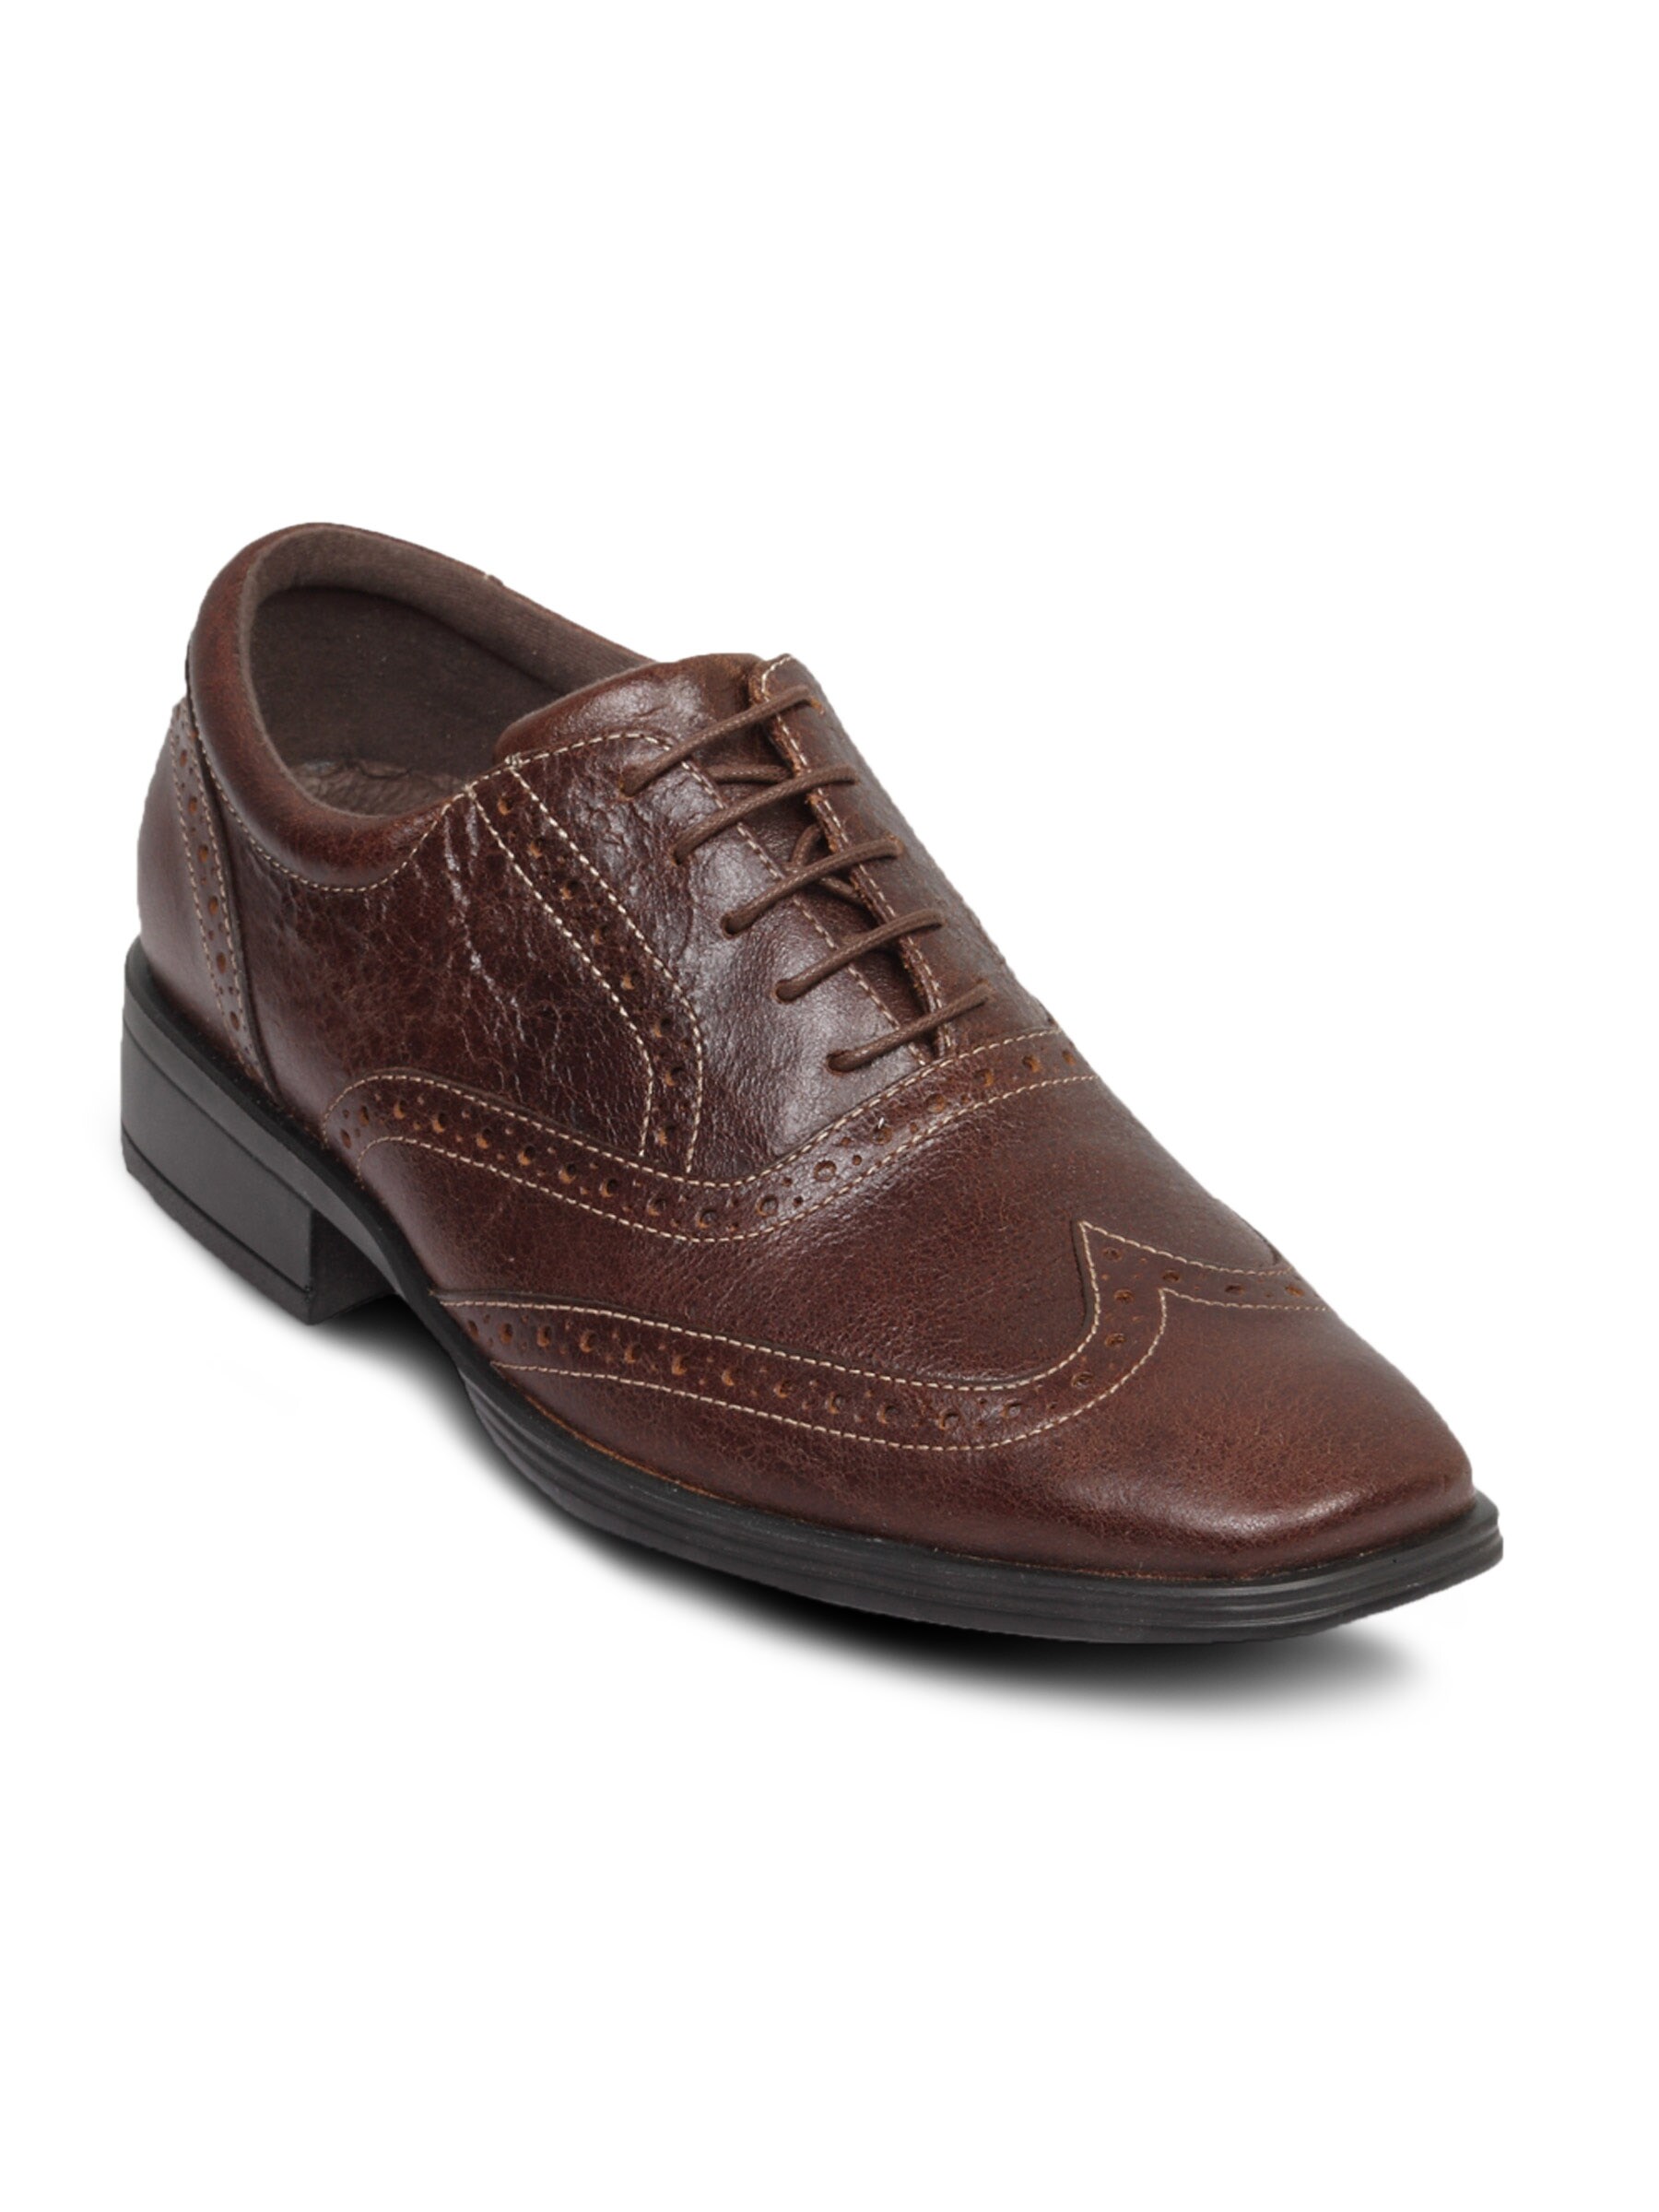 Rockport Men's Mepozo Distressed Brown Shoe